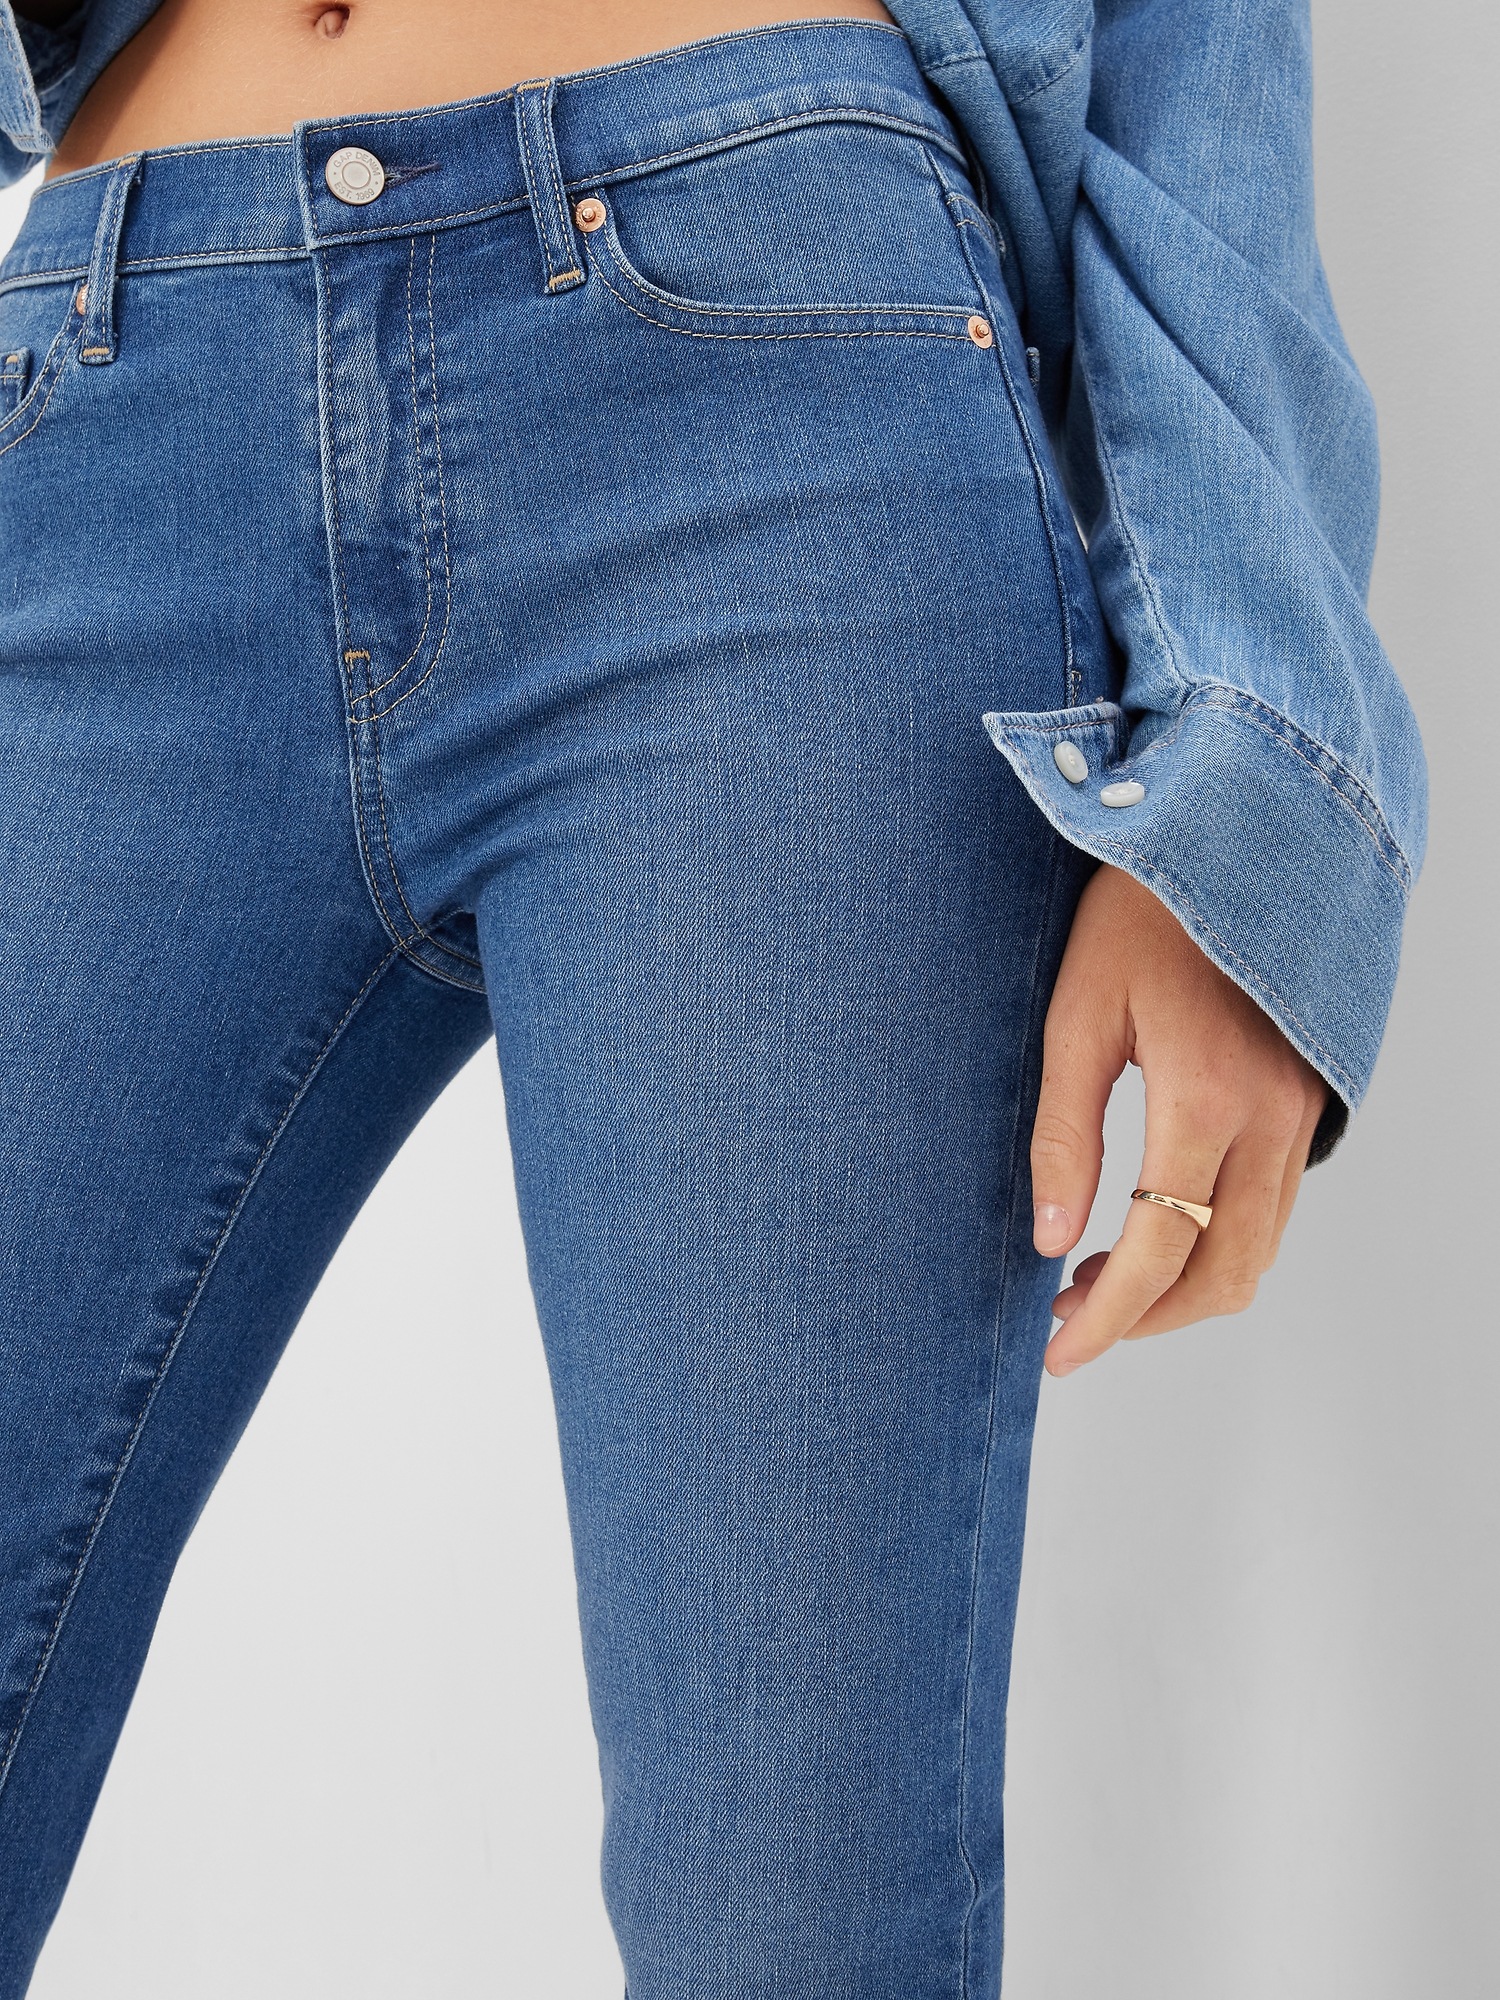 Fashion Bug Solid Blue Jeans Size 4 (Plus) - 57% off